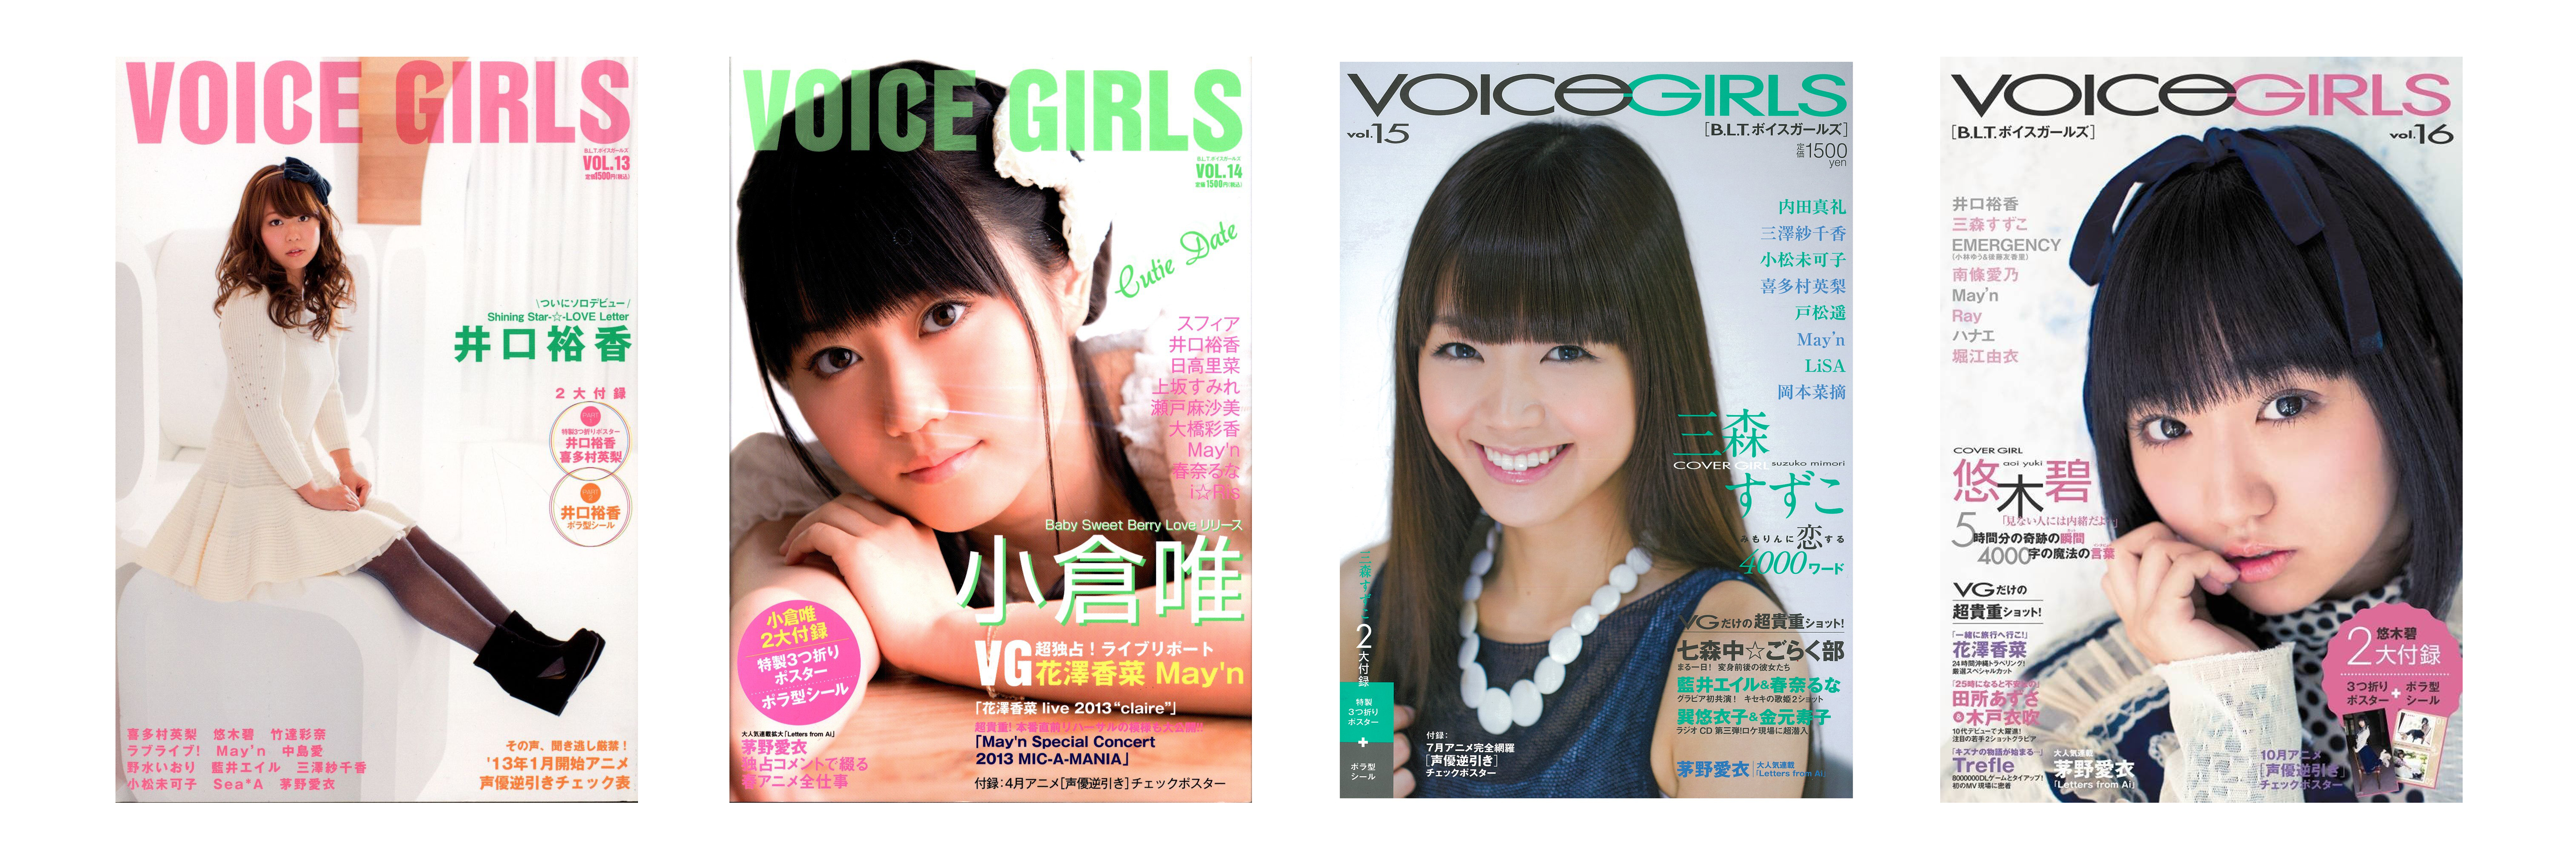 B L T Voice Girls Vol 42 B L T Voice Girls Play